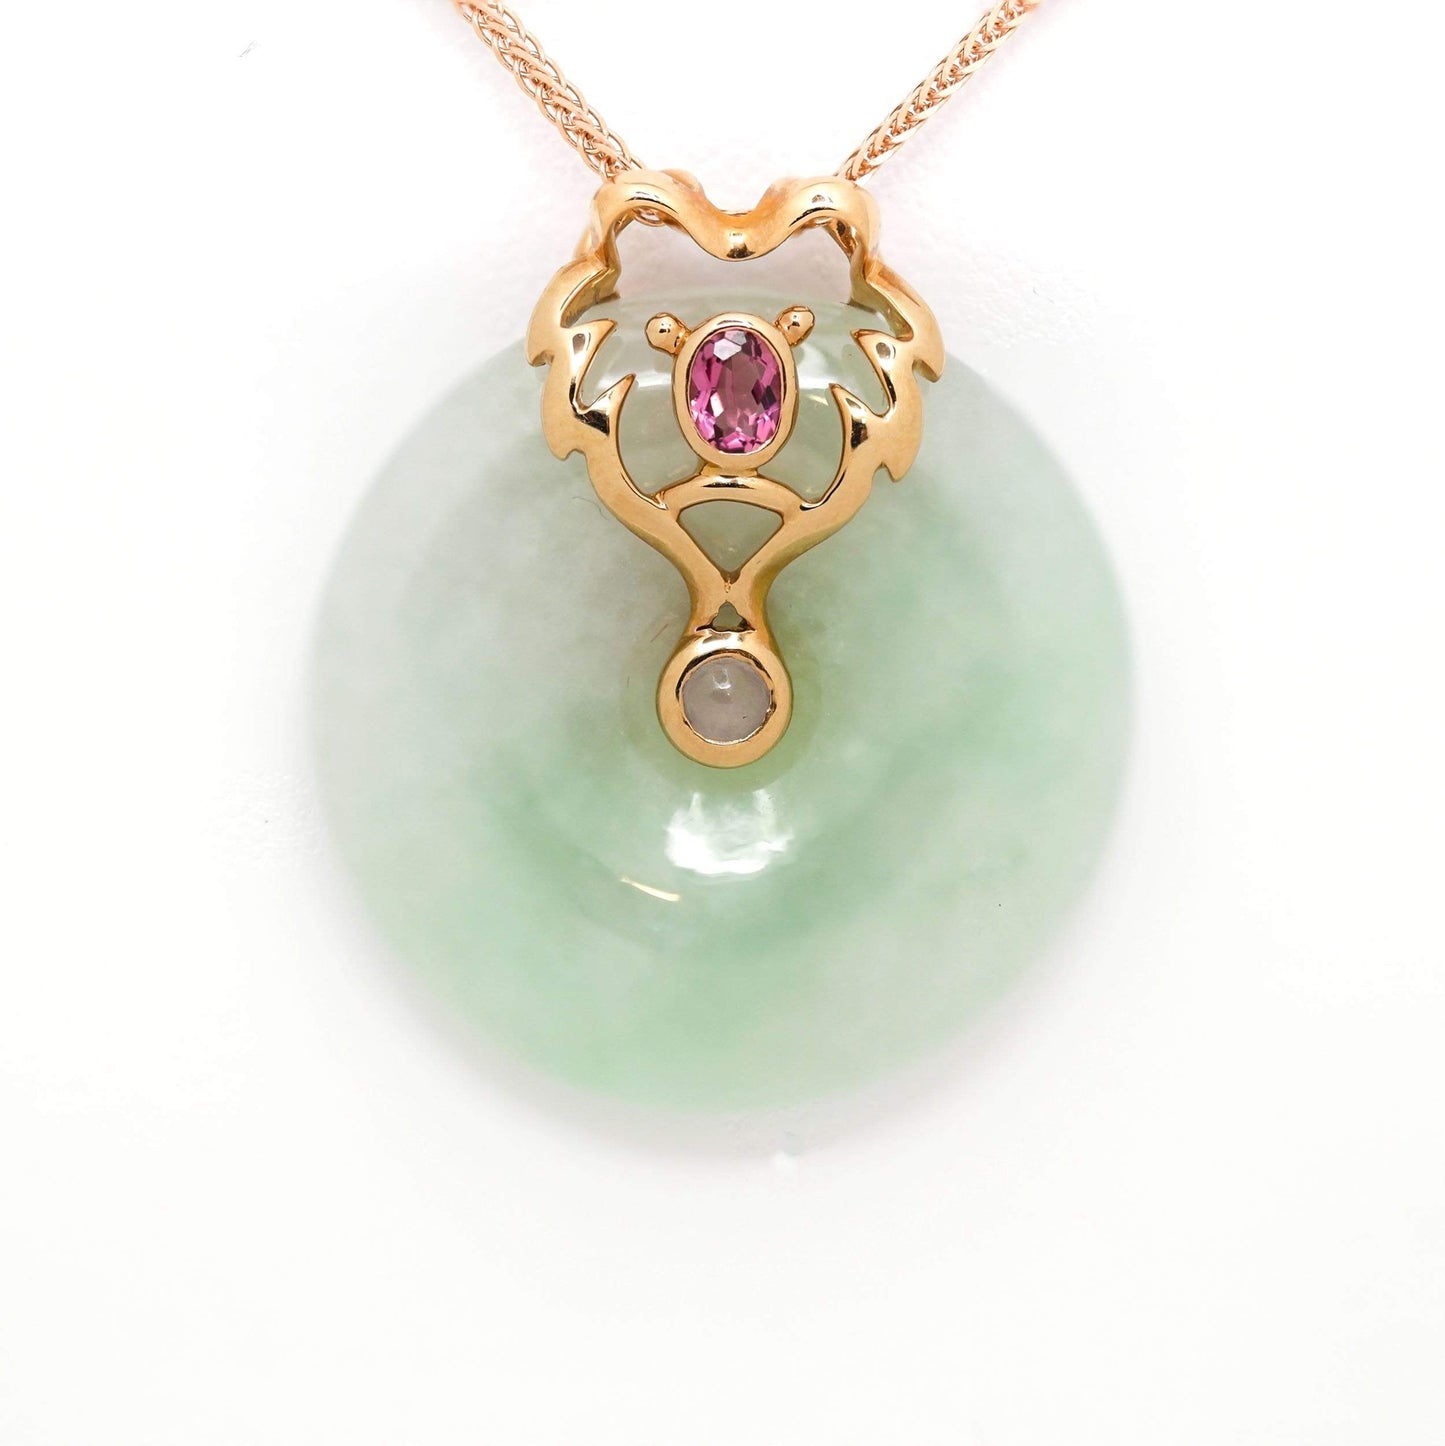 18k Rose Gold Genuine Jadeite Constellation (Leo) Necklace Pendant with Tourmaline